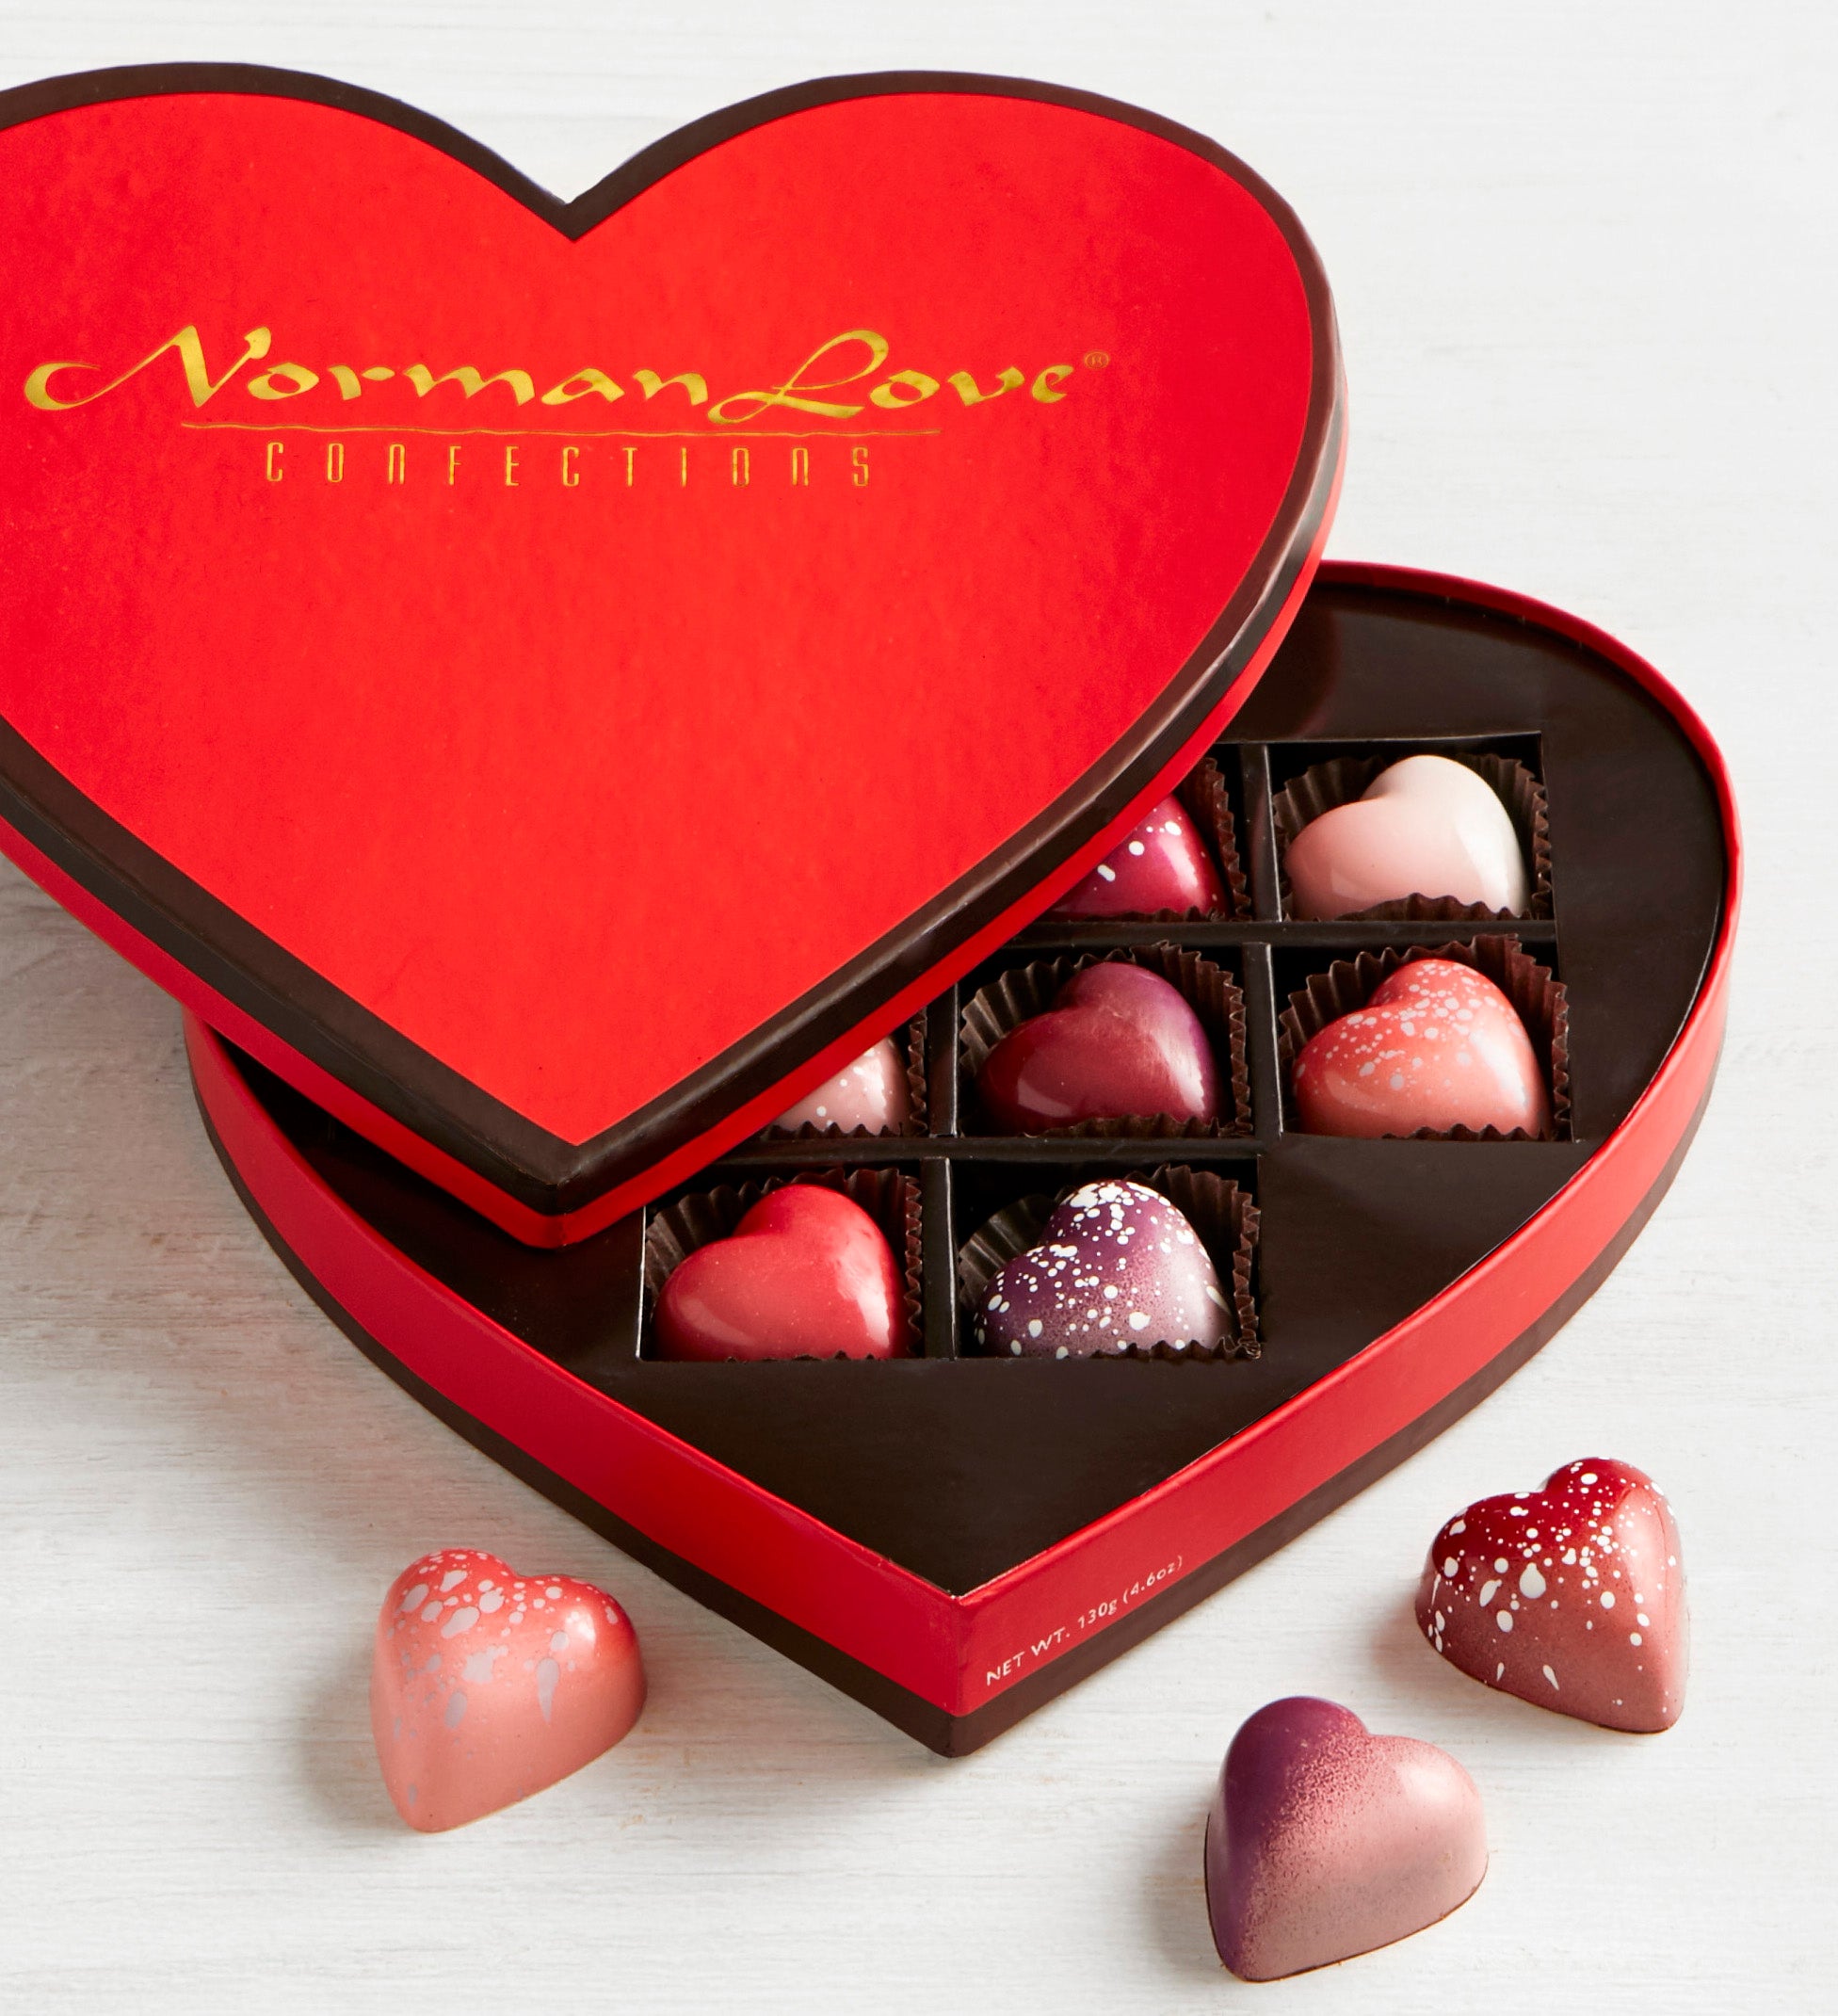 Norman Love Confections 10 pc Heart Box